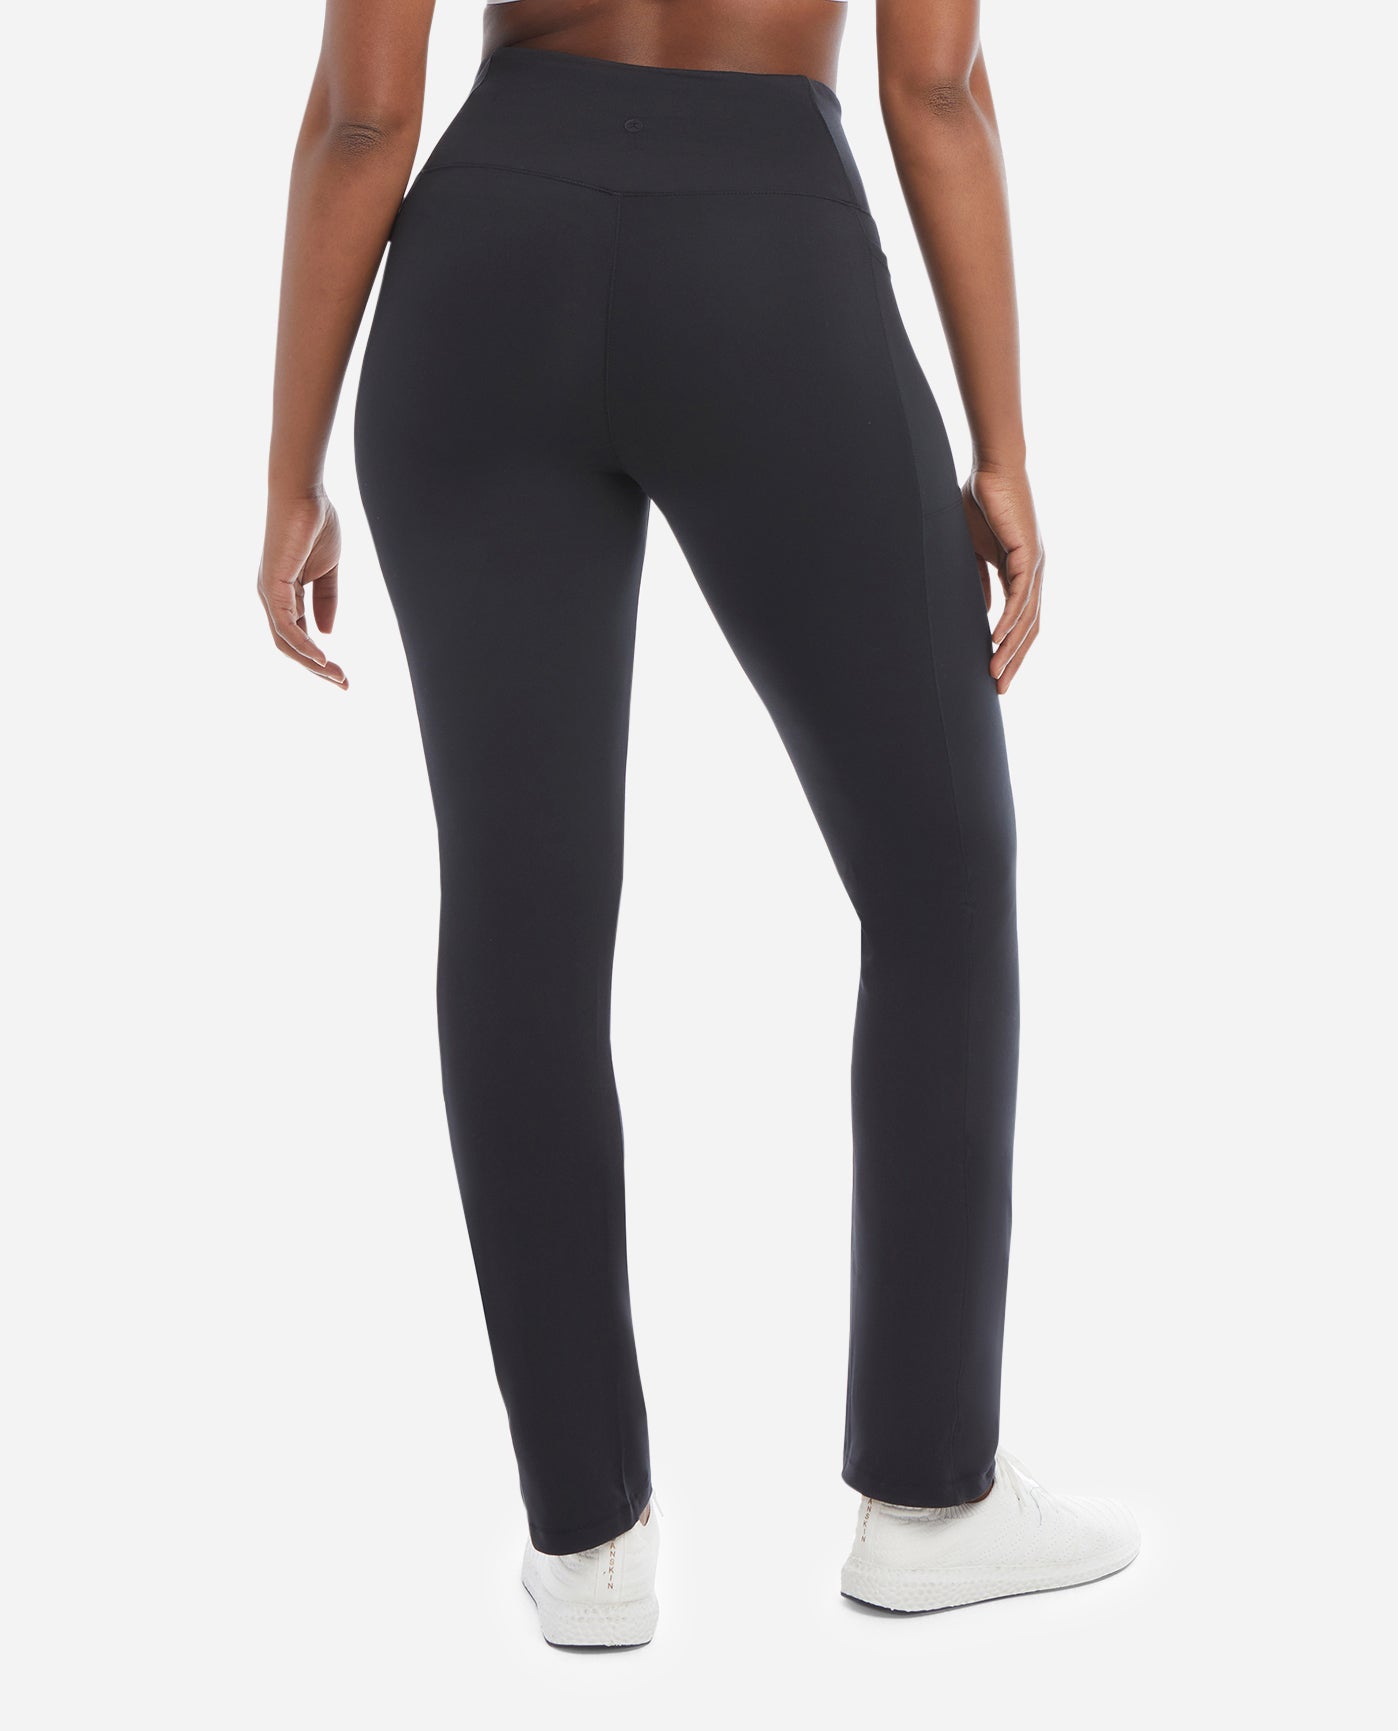 DANSKIN NOW Womens Size M Medium 8/10 Black Yoga Pants Cotton Spandex  Stretch